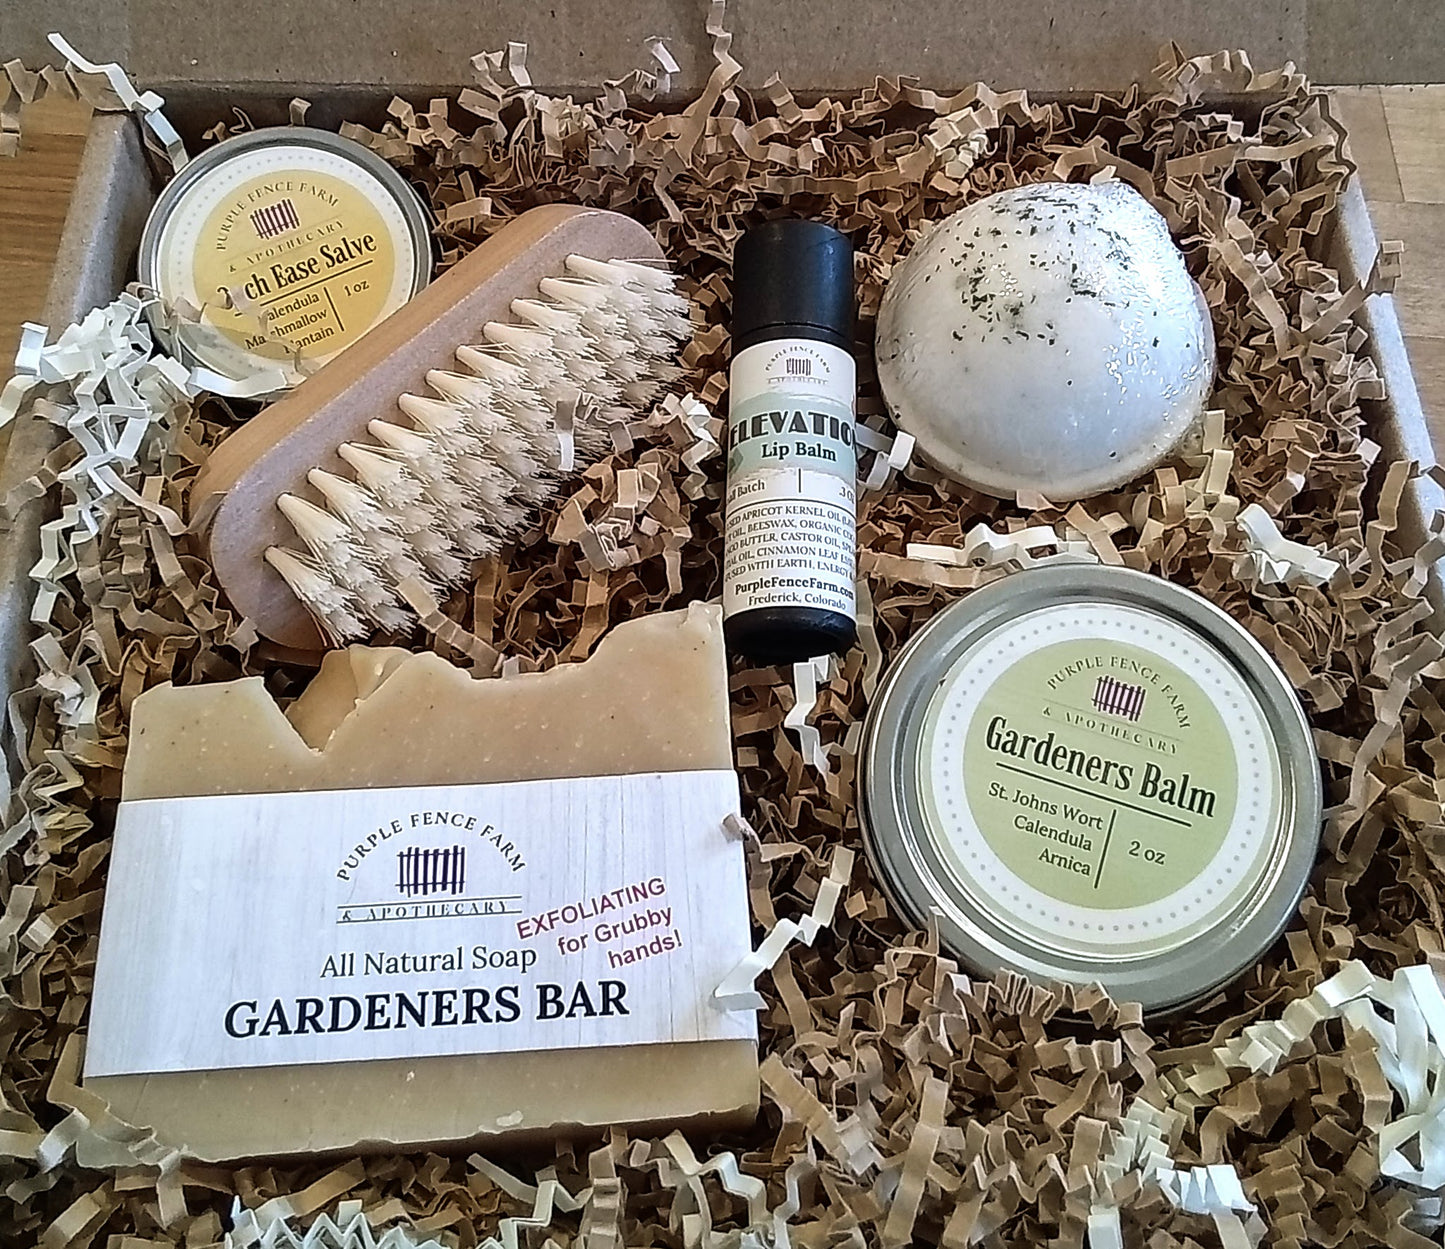 The Gardeners "tool box" Gift Set